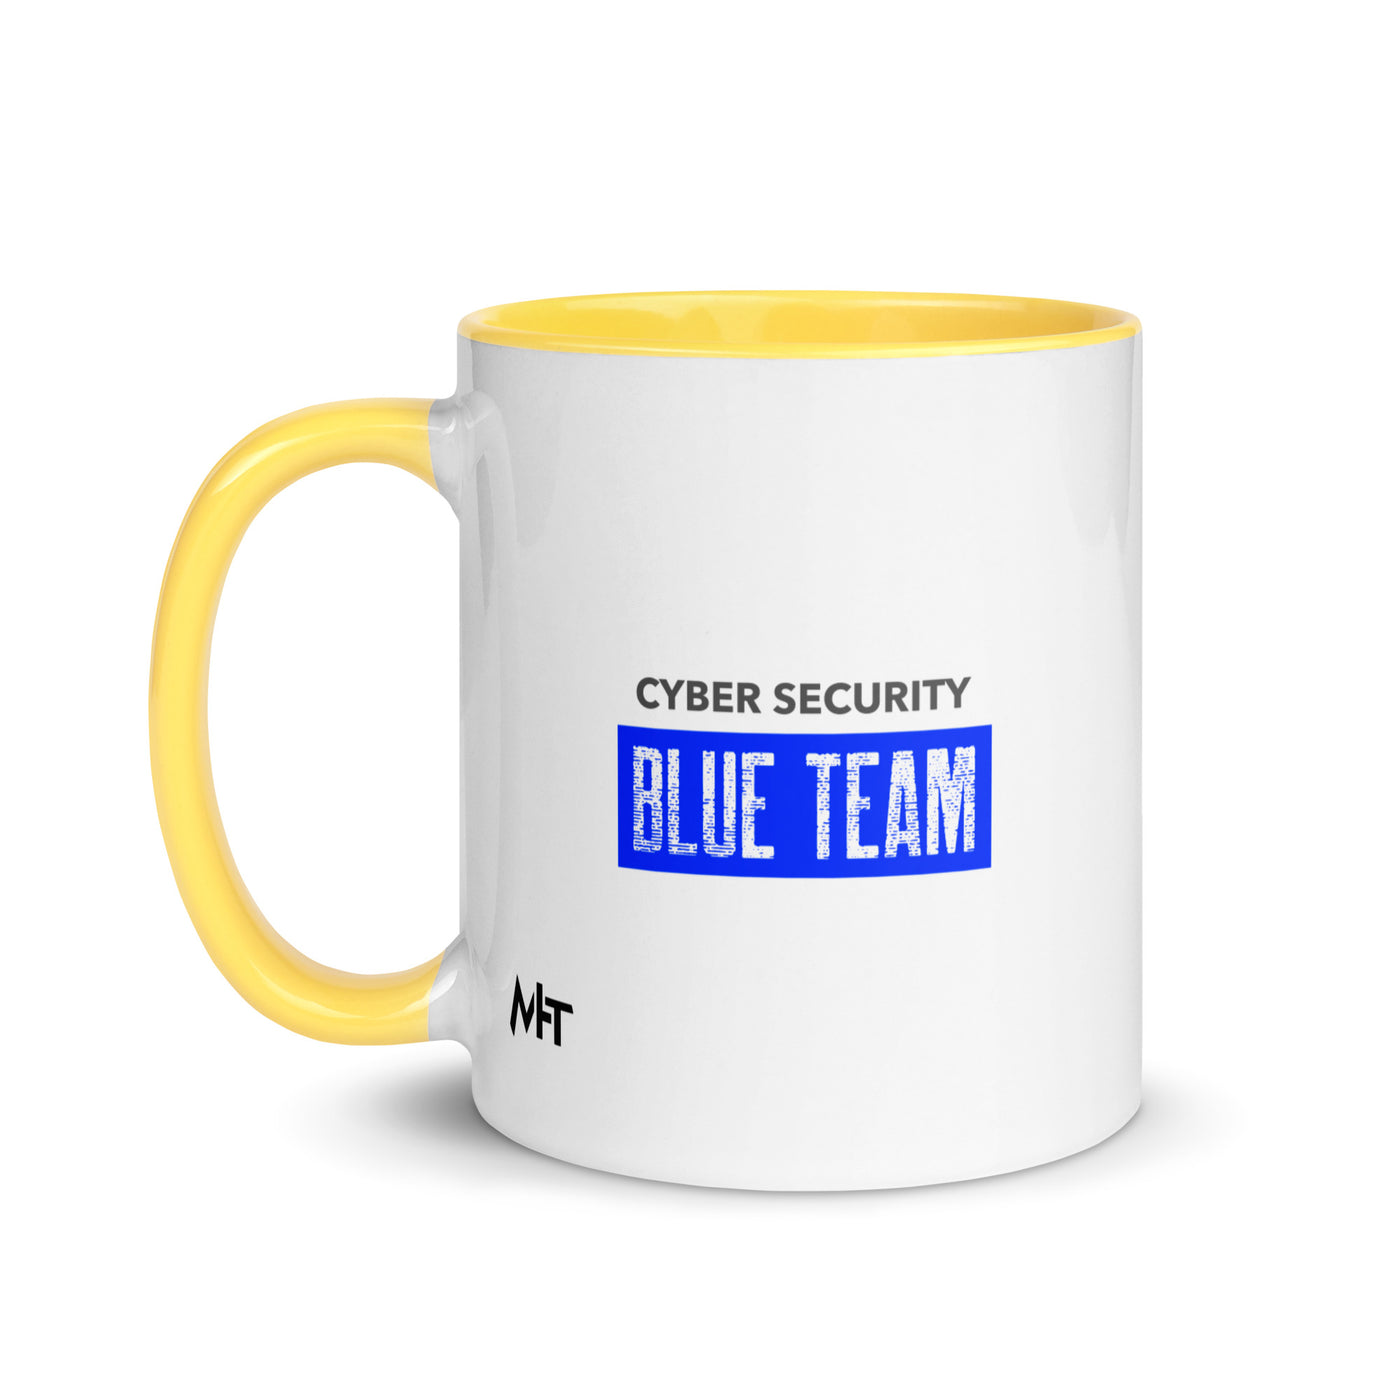 Cyber Security Blue Team V5 - Mug with Color Inside